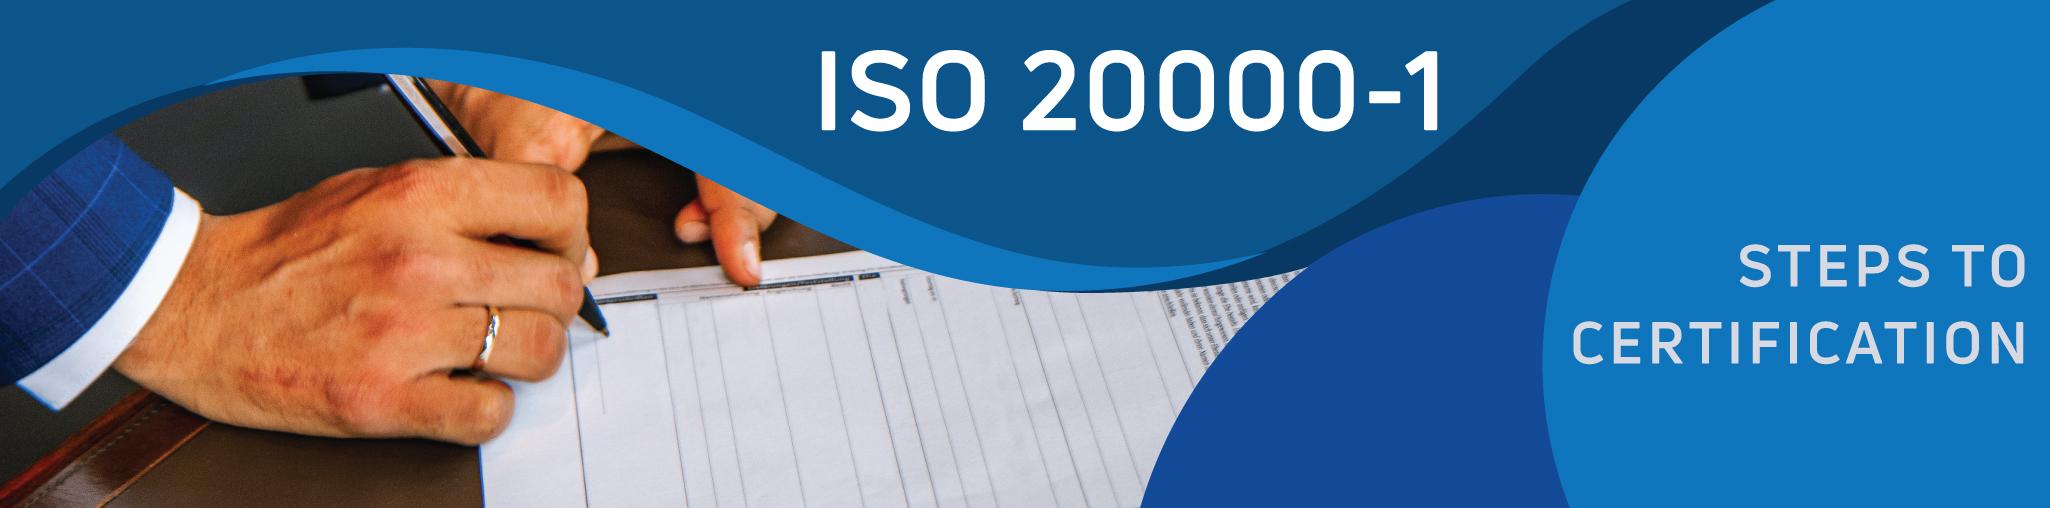 ISO 20000-1 Certification Steps